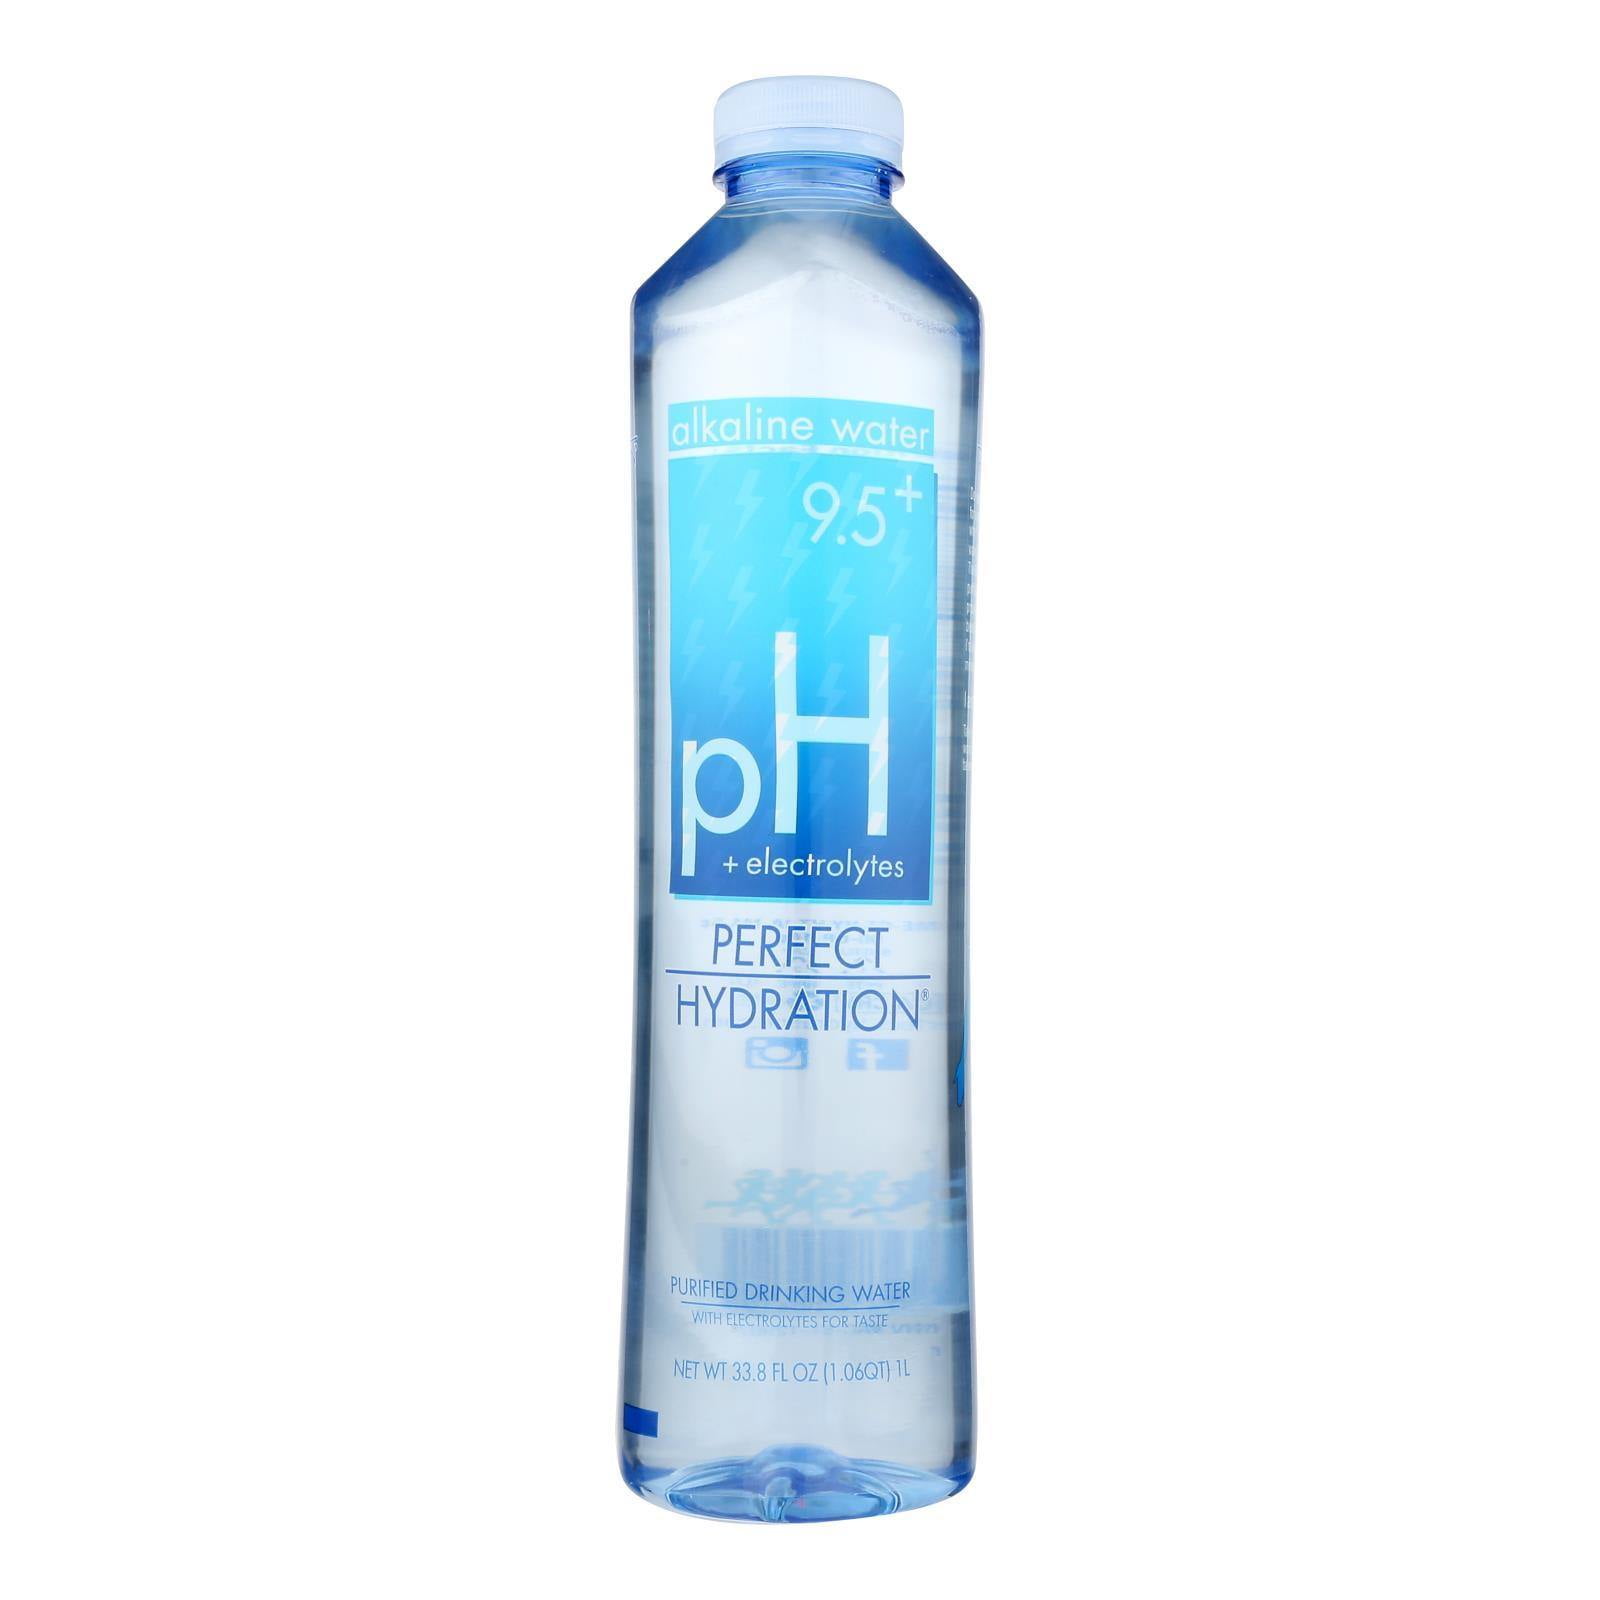 CORE Hydration Nutrient Enhanced Water, 30.4 Fl Oz, 12 Pack Bottles